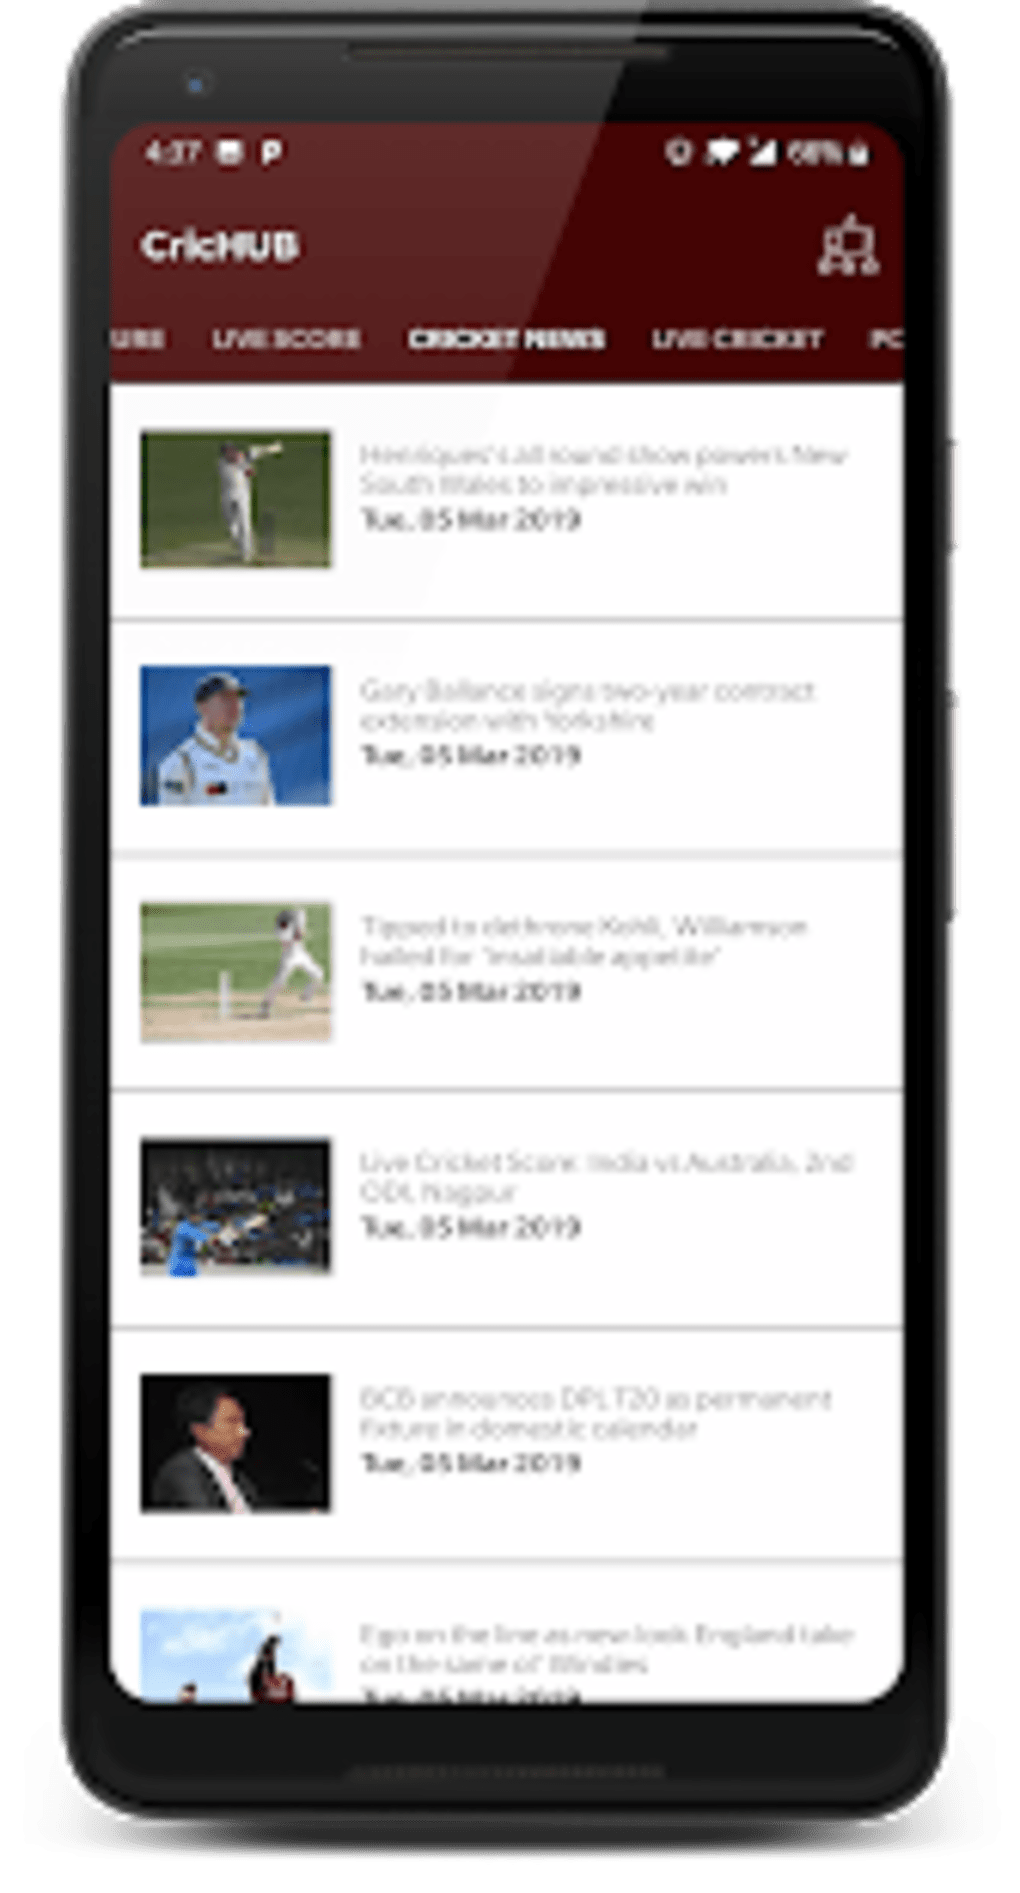 gtv live cricket match today online video